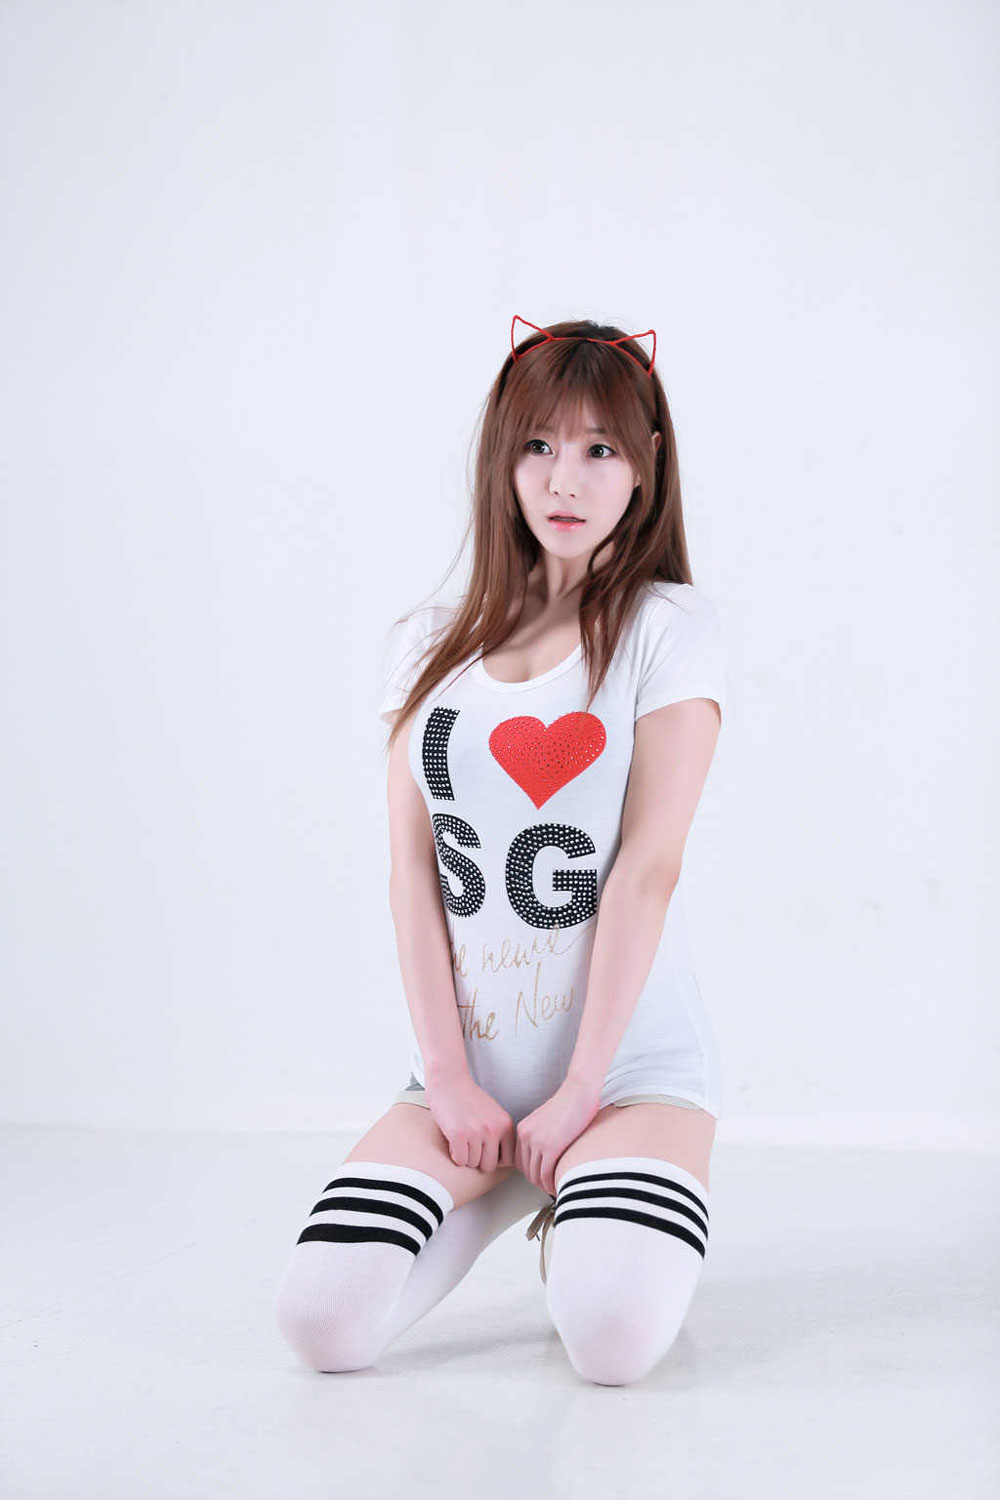 Model Choi Seul Gi loves Singapore